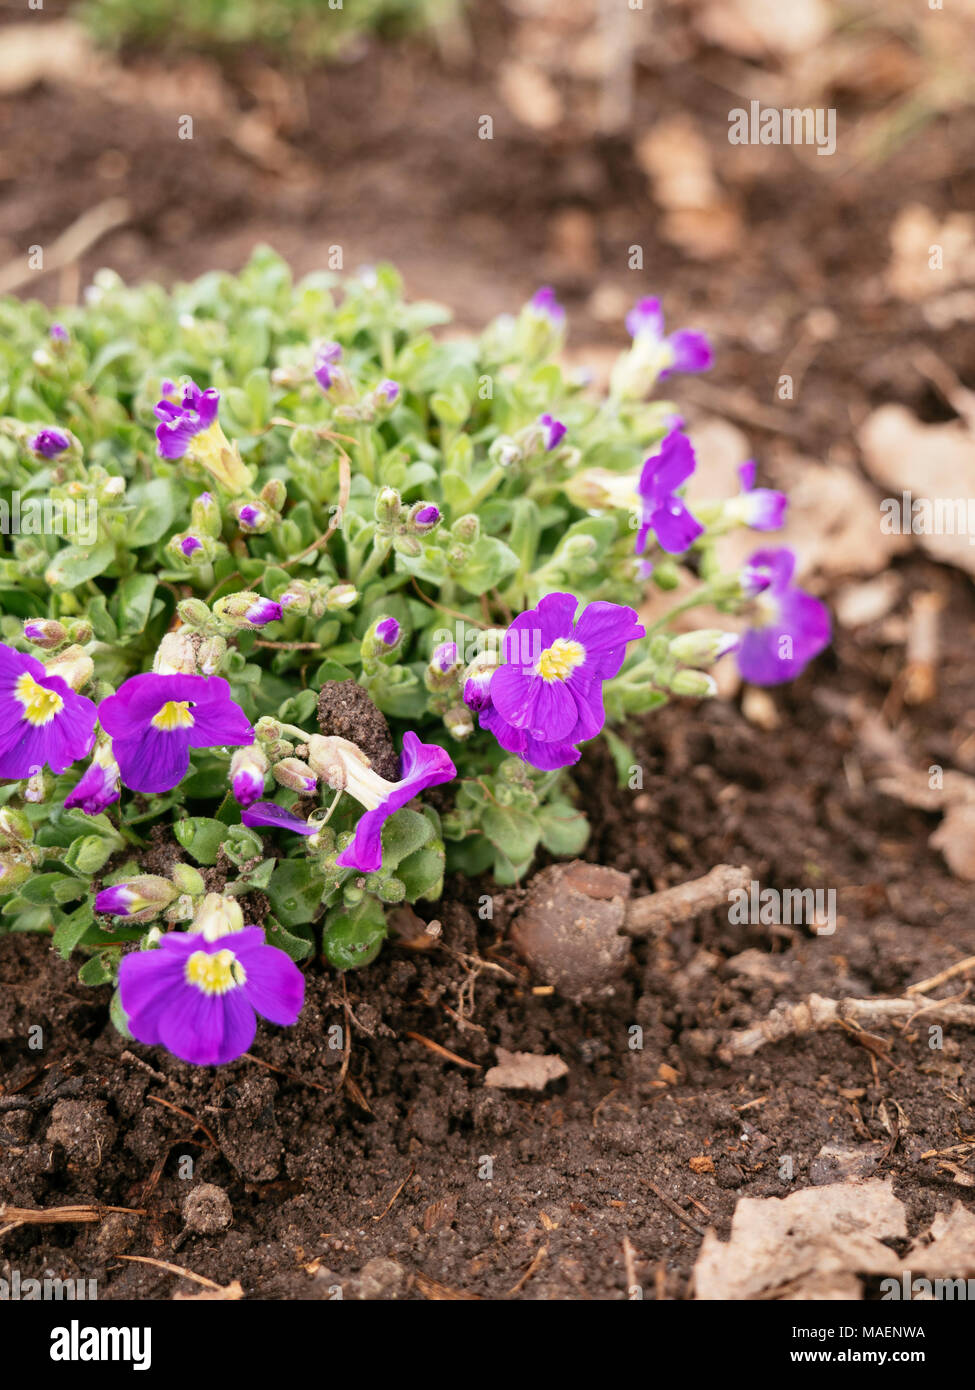 Aubrieta x cultorum 'Kitte' with small violet flowers. Stock Photo